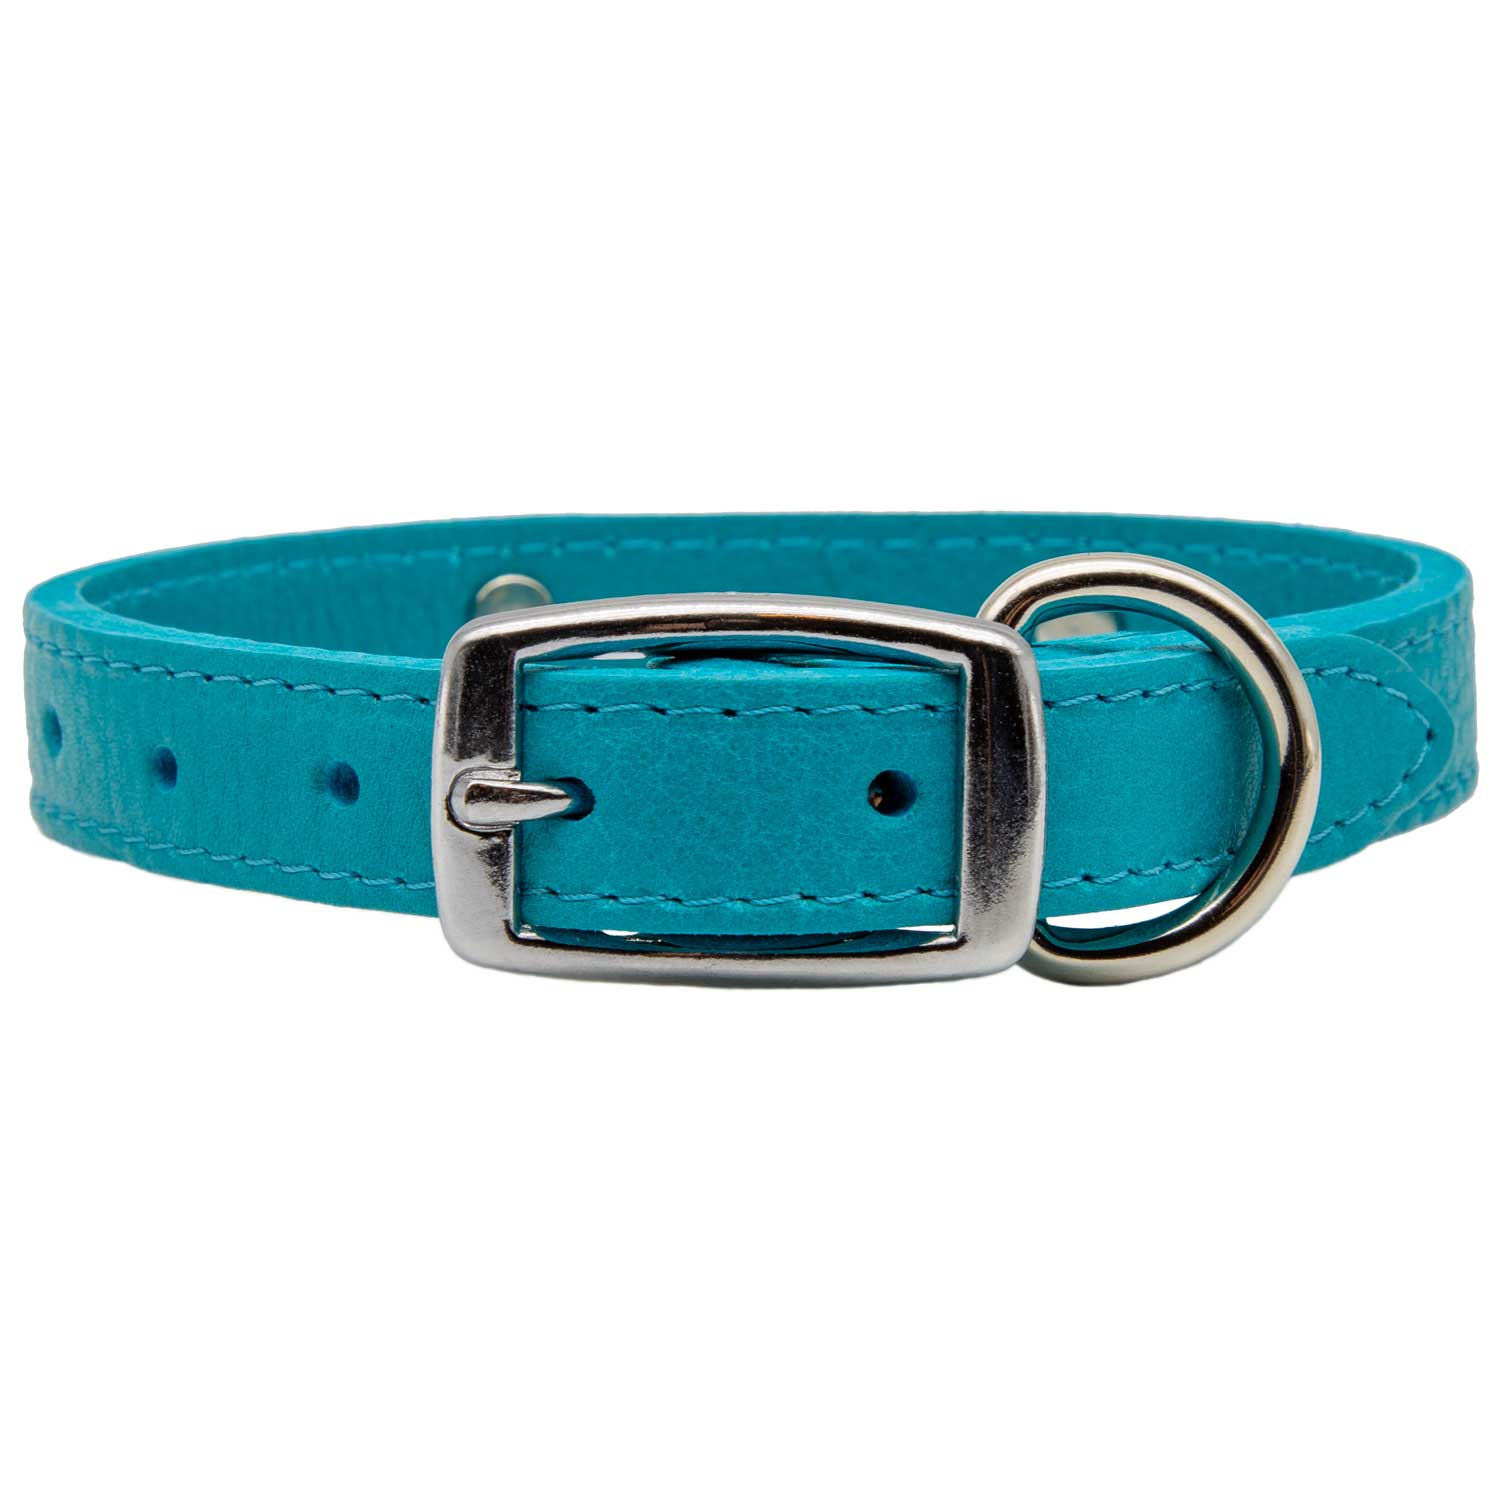 Designer Soft Leather Dog Collar Turquoise Buckle Side